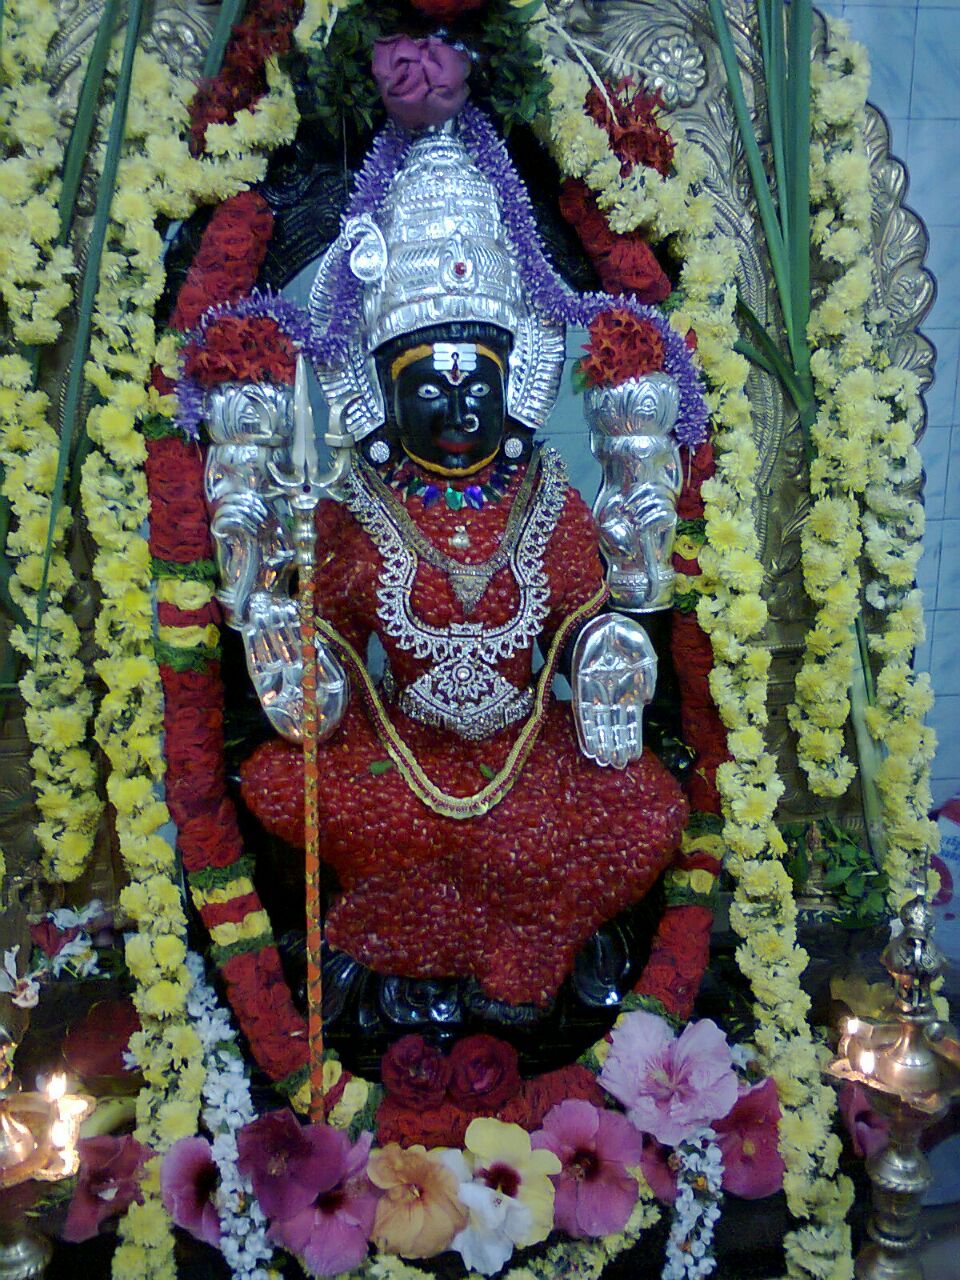 File:Goddess mahalakshmi image 8.jpg - Wikimedia Commons